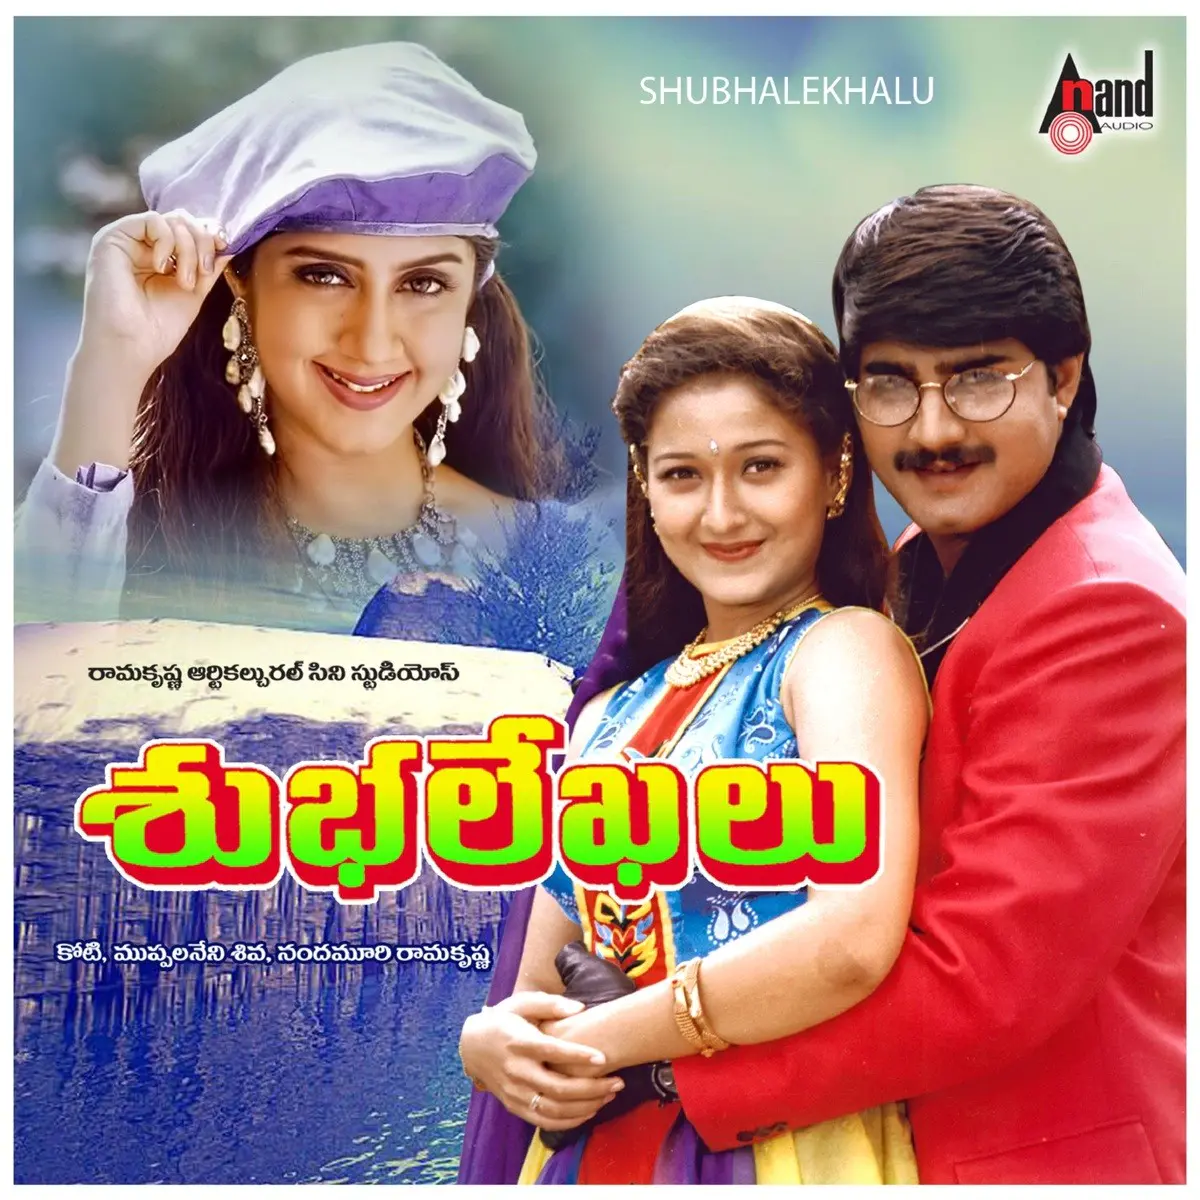 Shubhalekhalu Songs Download Shubhalekhalu Mp3 Telugu Songs Online Free On Gaana Com 26th june 2019 october 4, 2019 at 12:56 am admin. shubhalekhalu mp3 telugu songs